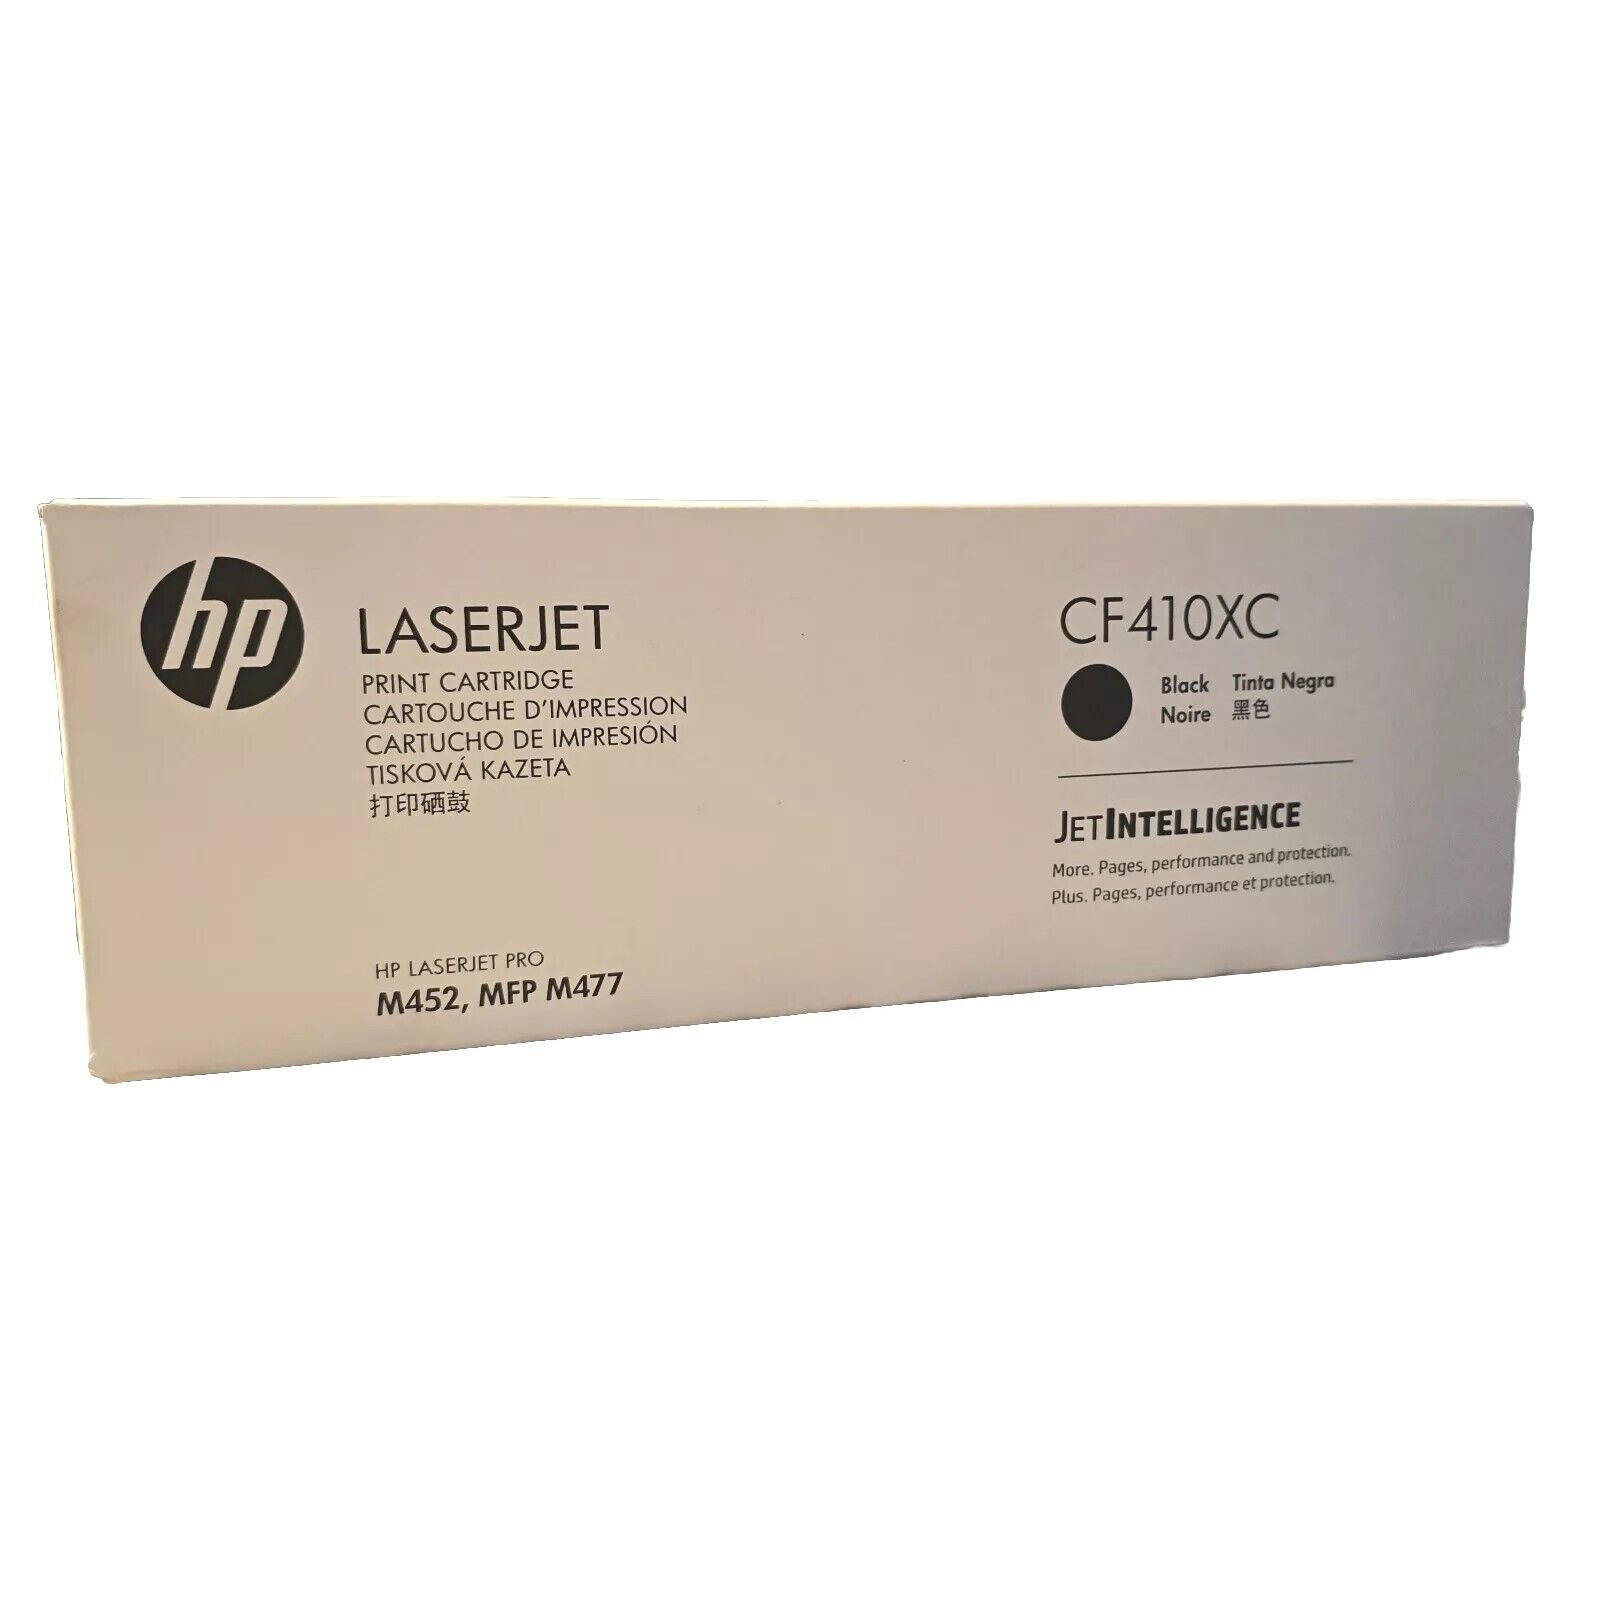 Genuine HP LaserJet 410X (CF410XC) Black Toner Cartridge NIB